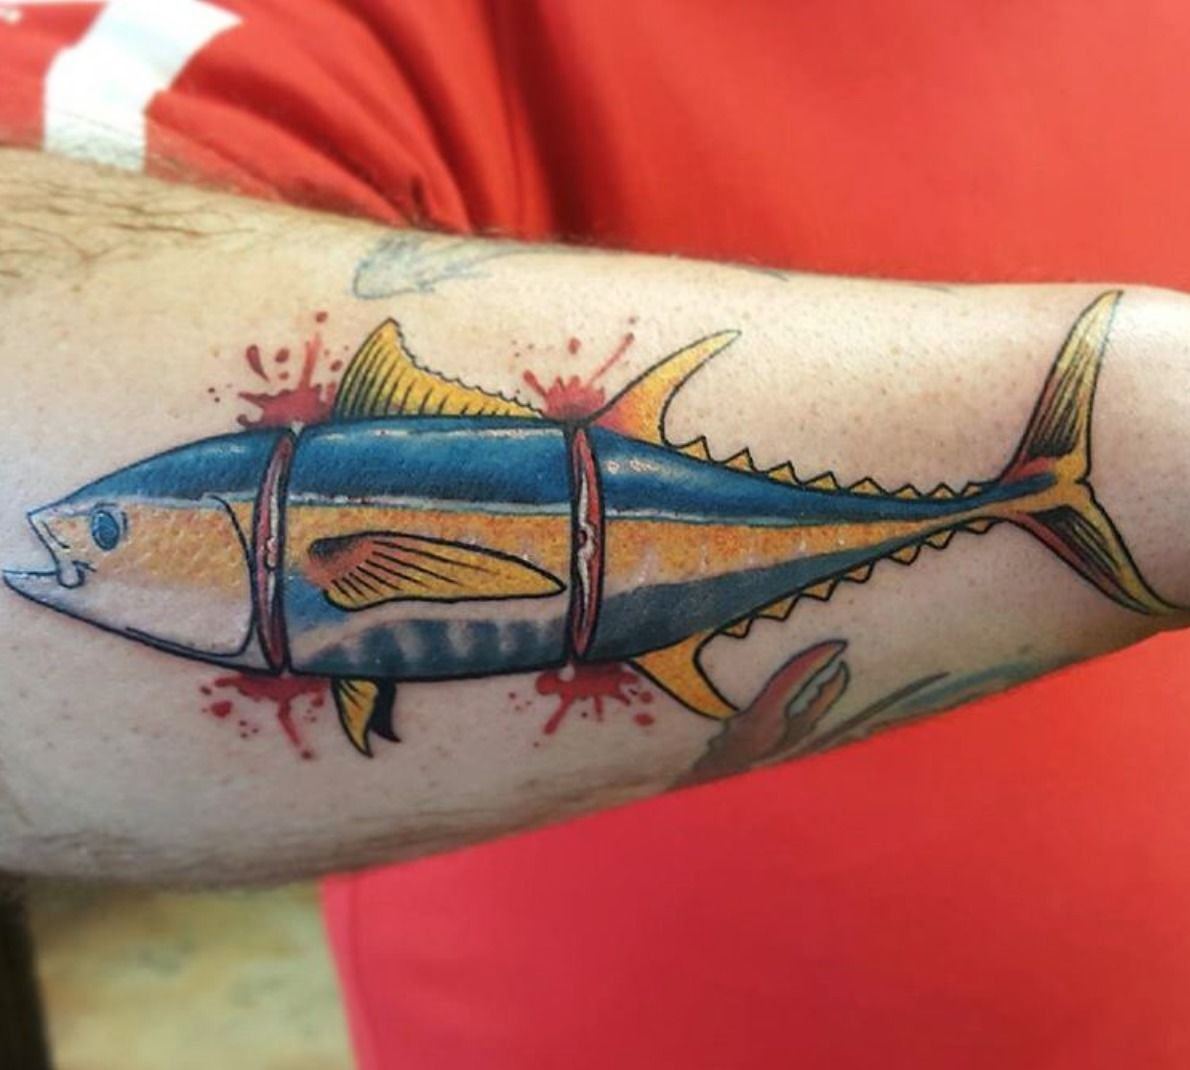 939 Tuna Fish Tattoo Images Stock Photos  Vectors  Shutterstock